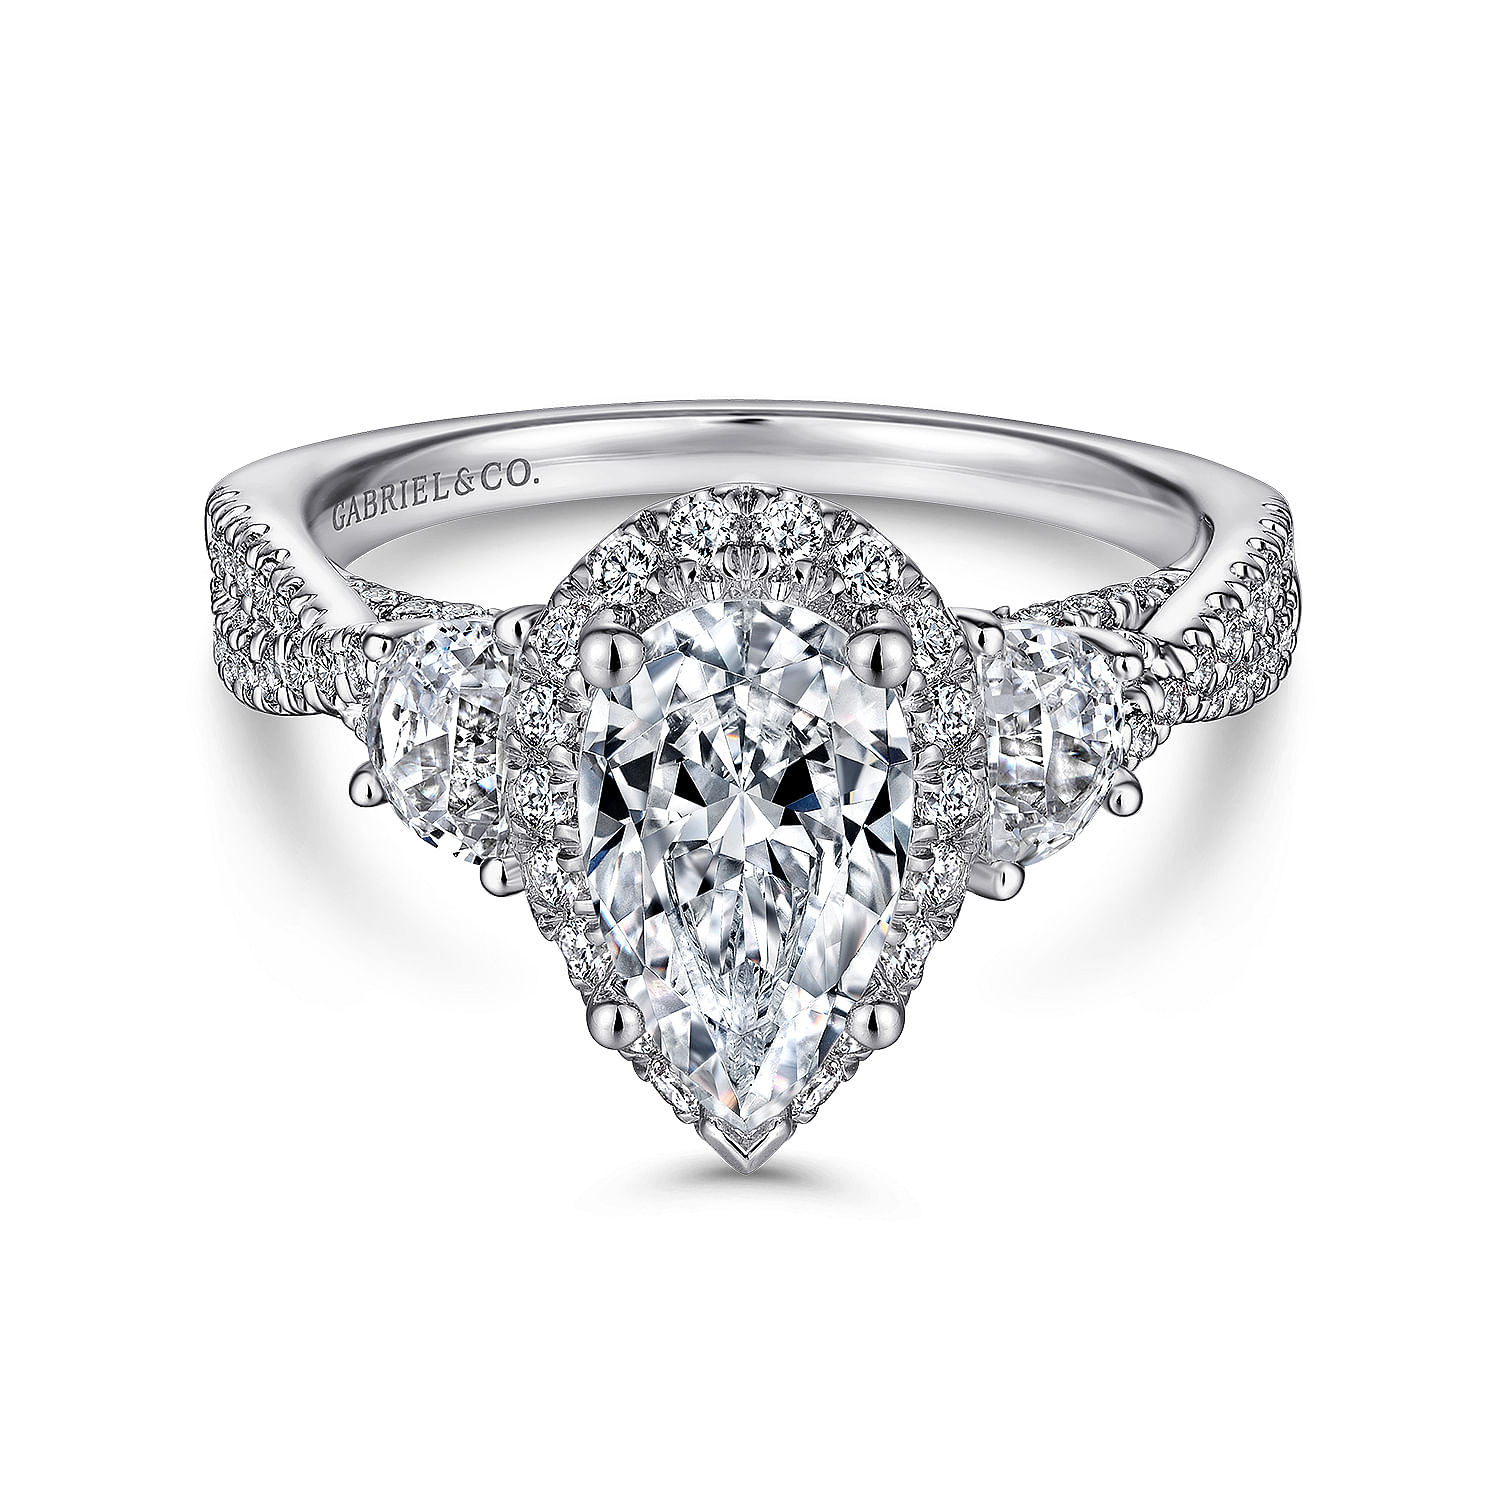 Bryson - 14K White Gold Pear Shape Diamond Engagement Ring